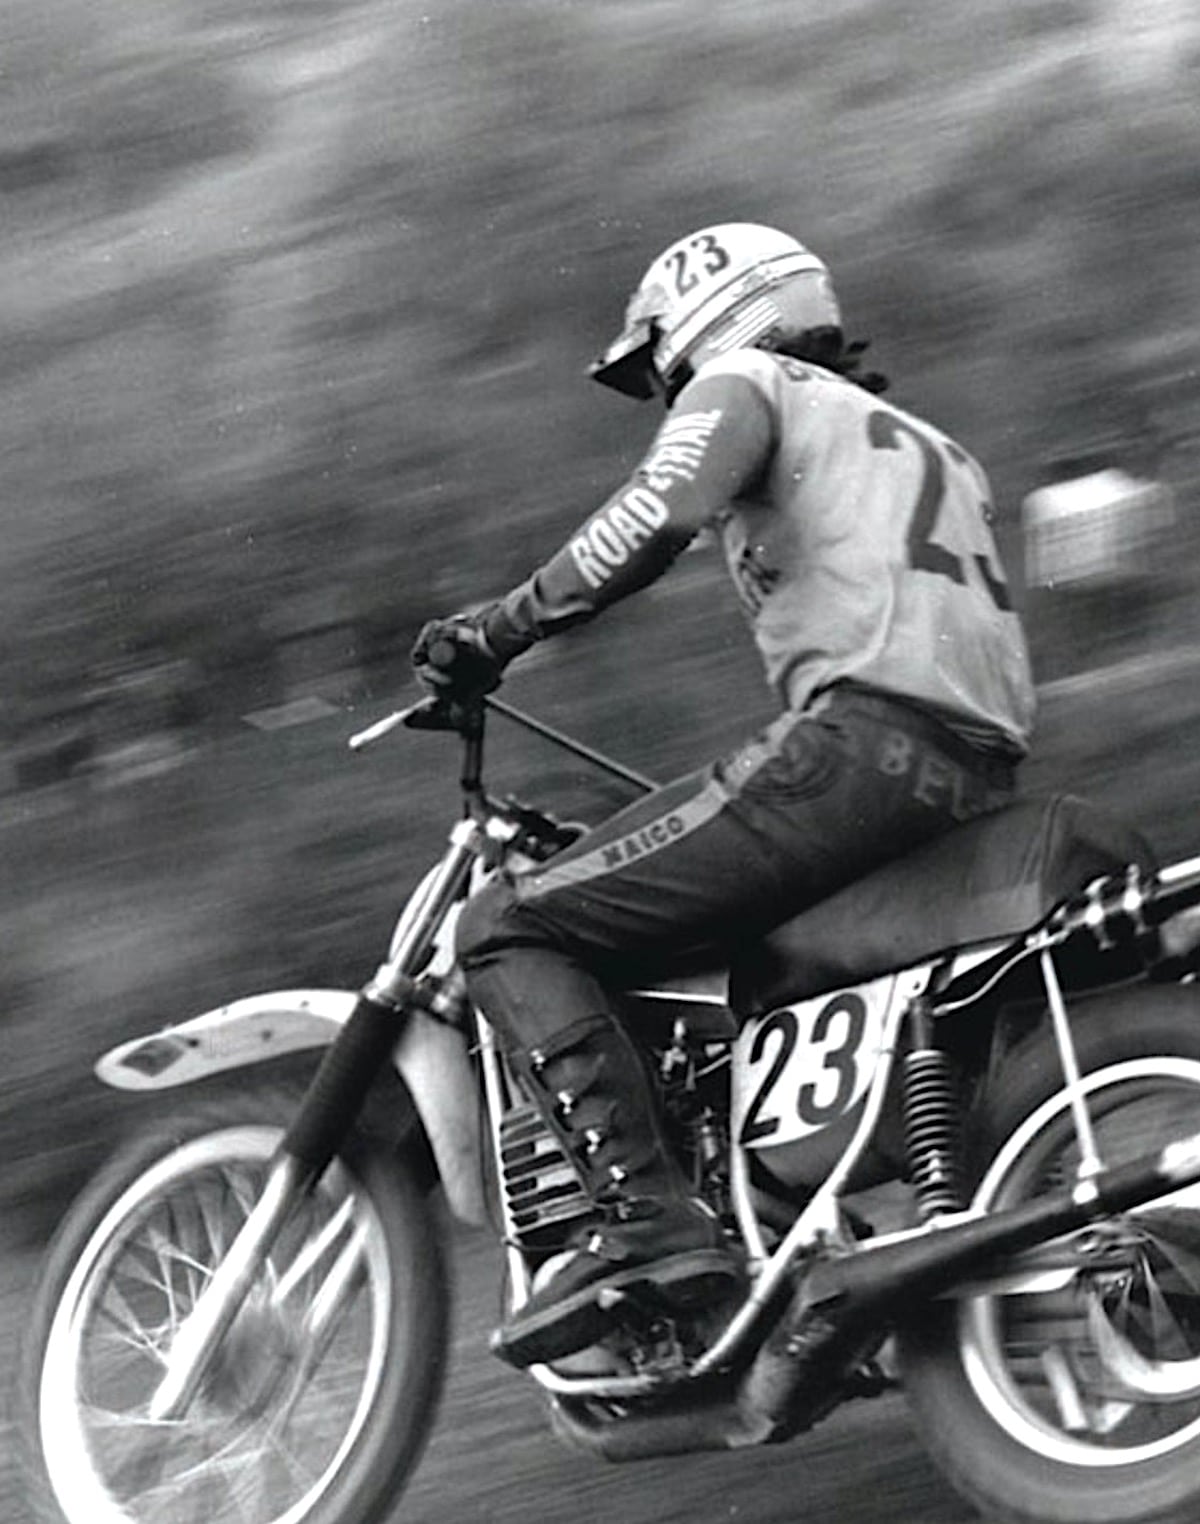 Mac Motorcycles by Mark Wells at Coroflot.com